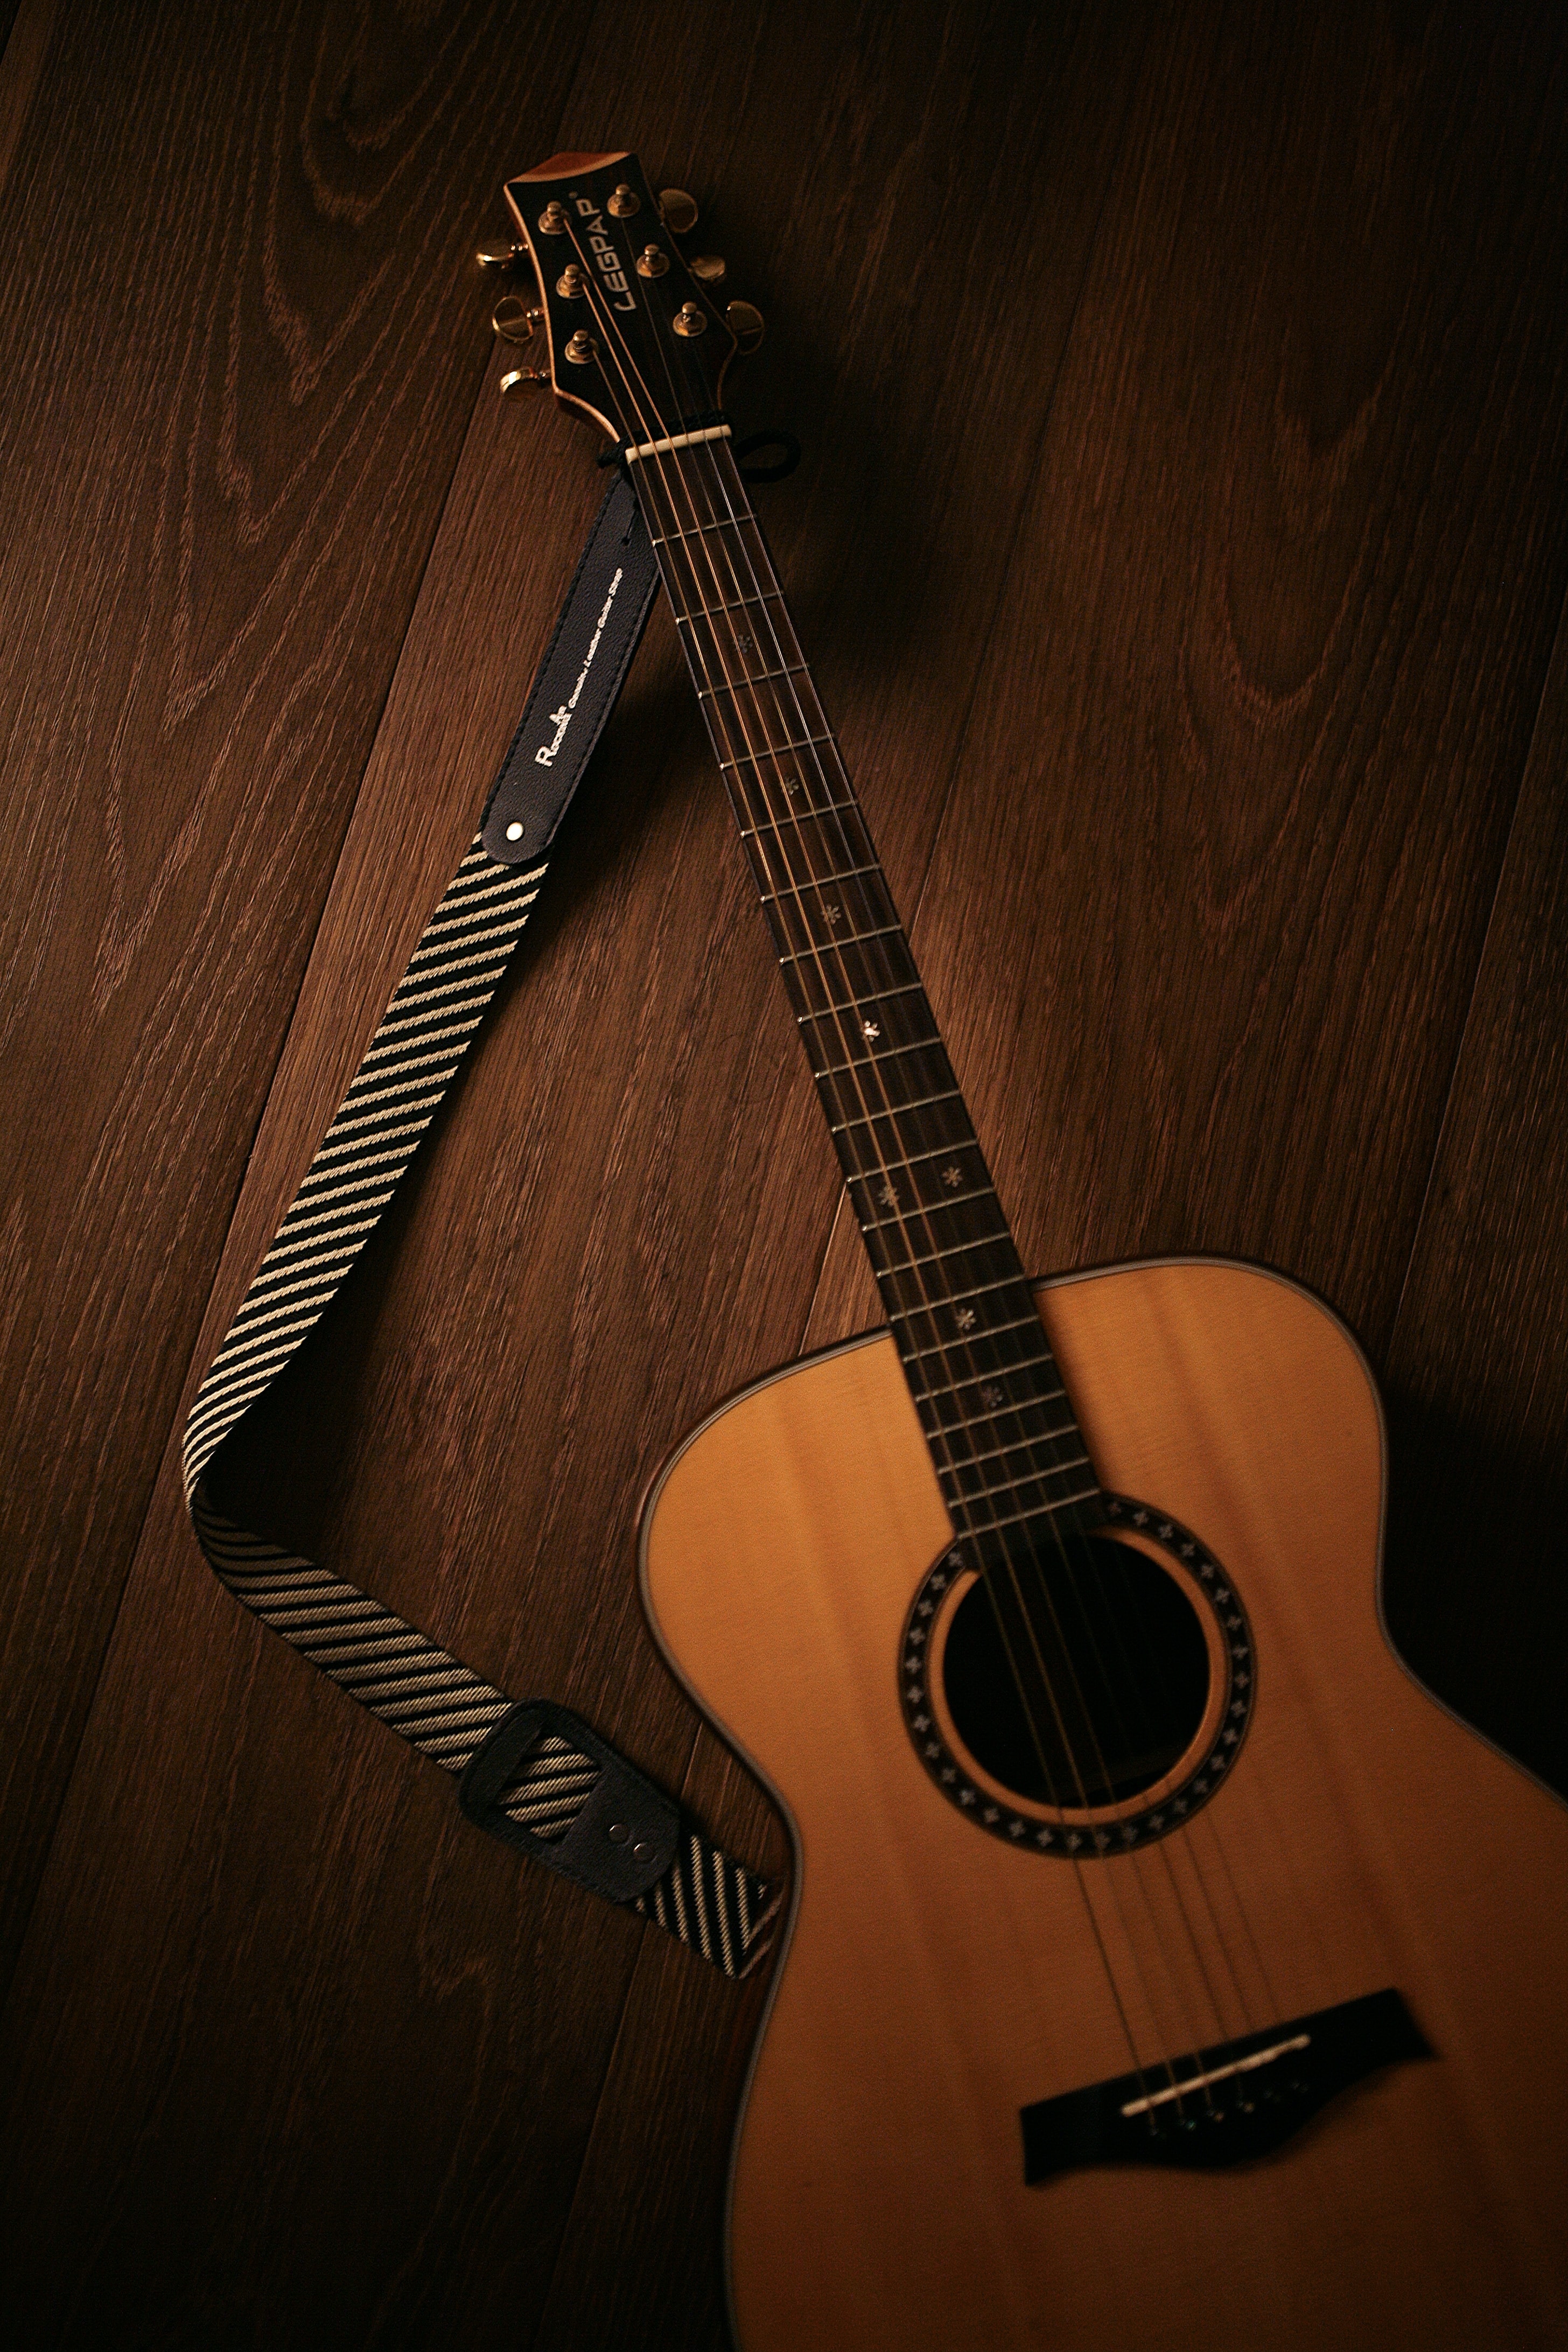 guitar, music, acoustic guitar, musical instrument, brown, wood, wooden